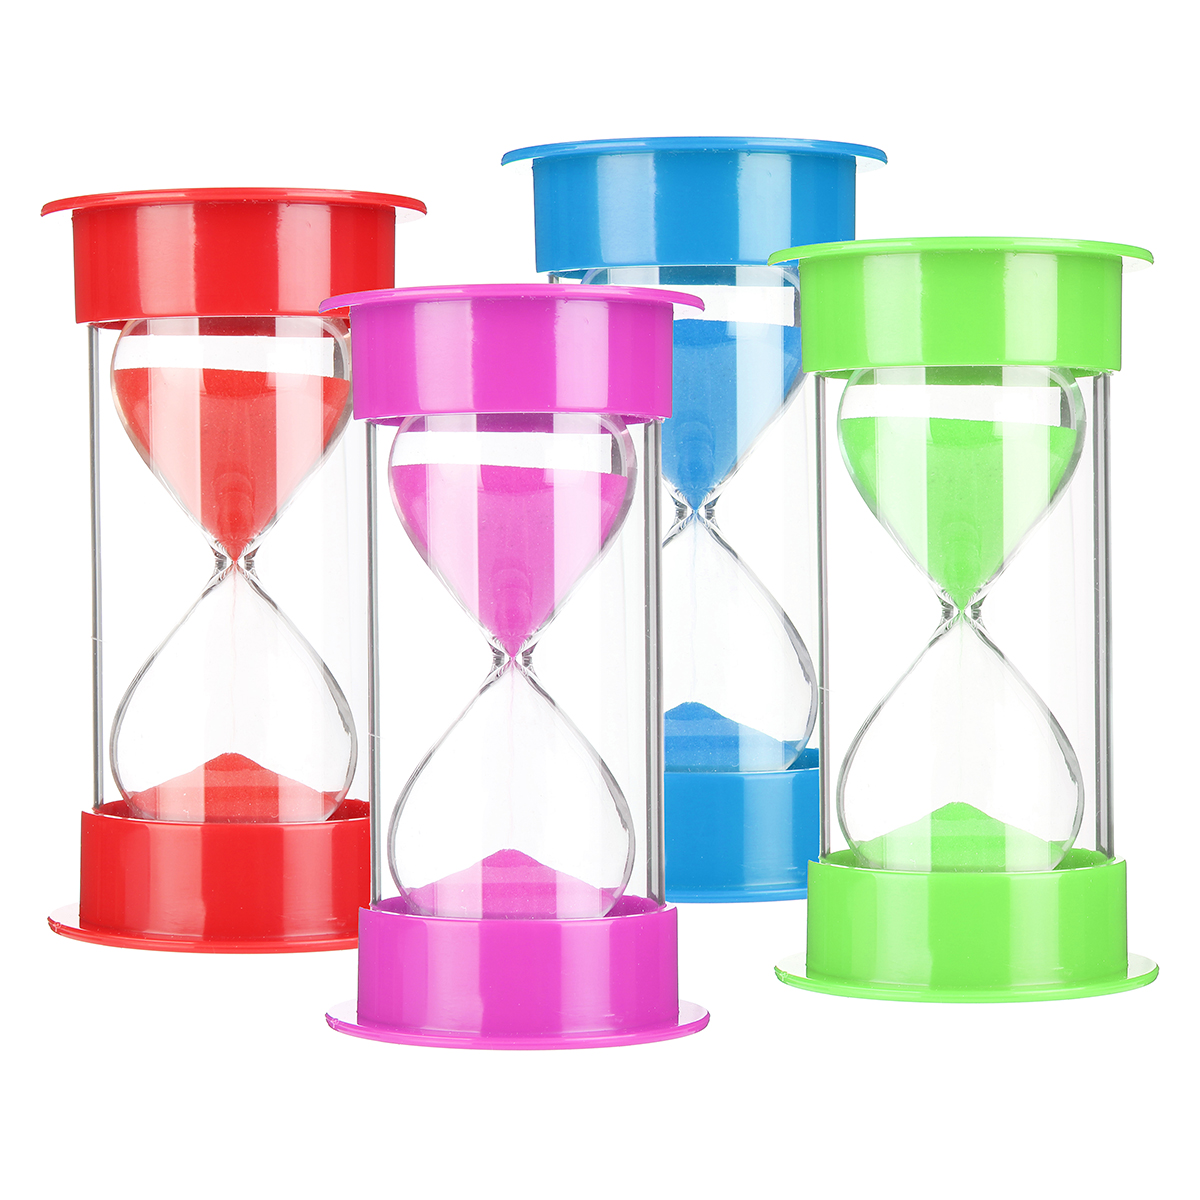 20-Minutes-12cm-Sandglass-Timer-Hourglass-Glass-Sand-Clock-Egg-Kid-Decor-Gift-1546465-4